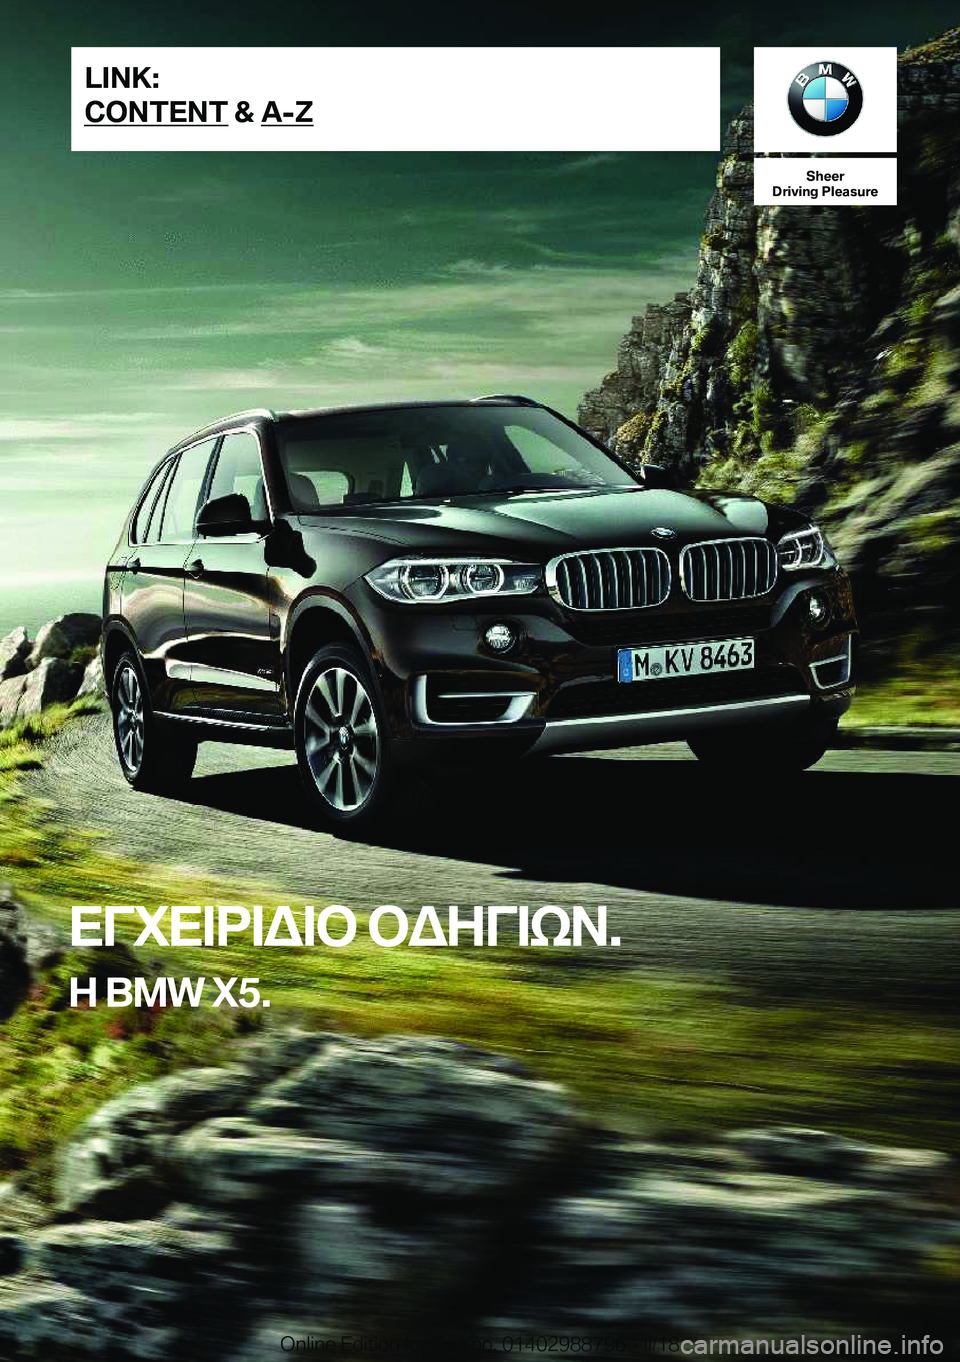 BMW X5 2018  ΟΔΗΓΌΣ ΧΡΉΣΗΣ (in Greek) �S�h�e�e�r
�D�r�i�v�i�n�g��P�l�e�a�s�u�r�e
XViX=d=W=b�bWZV=kA�.
Z��B�M�W��X�5�.�L�I�N�K�:
�C�O�N�T�E�N�T��&��A�-�Z�O�n�l�i�n�e� �E�d�i�t�i�o�n� �f�o�r� �P�a�r�t� �n�o�.� �0�1�4